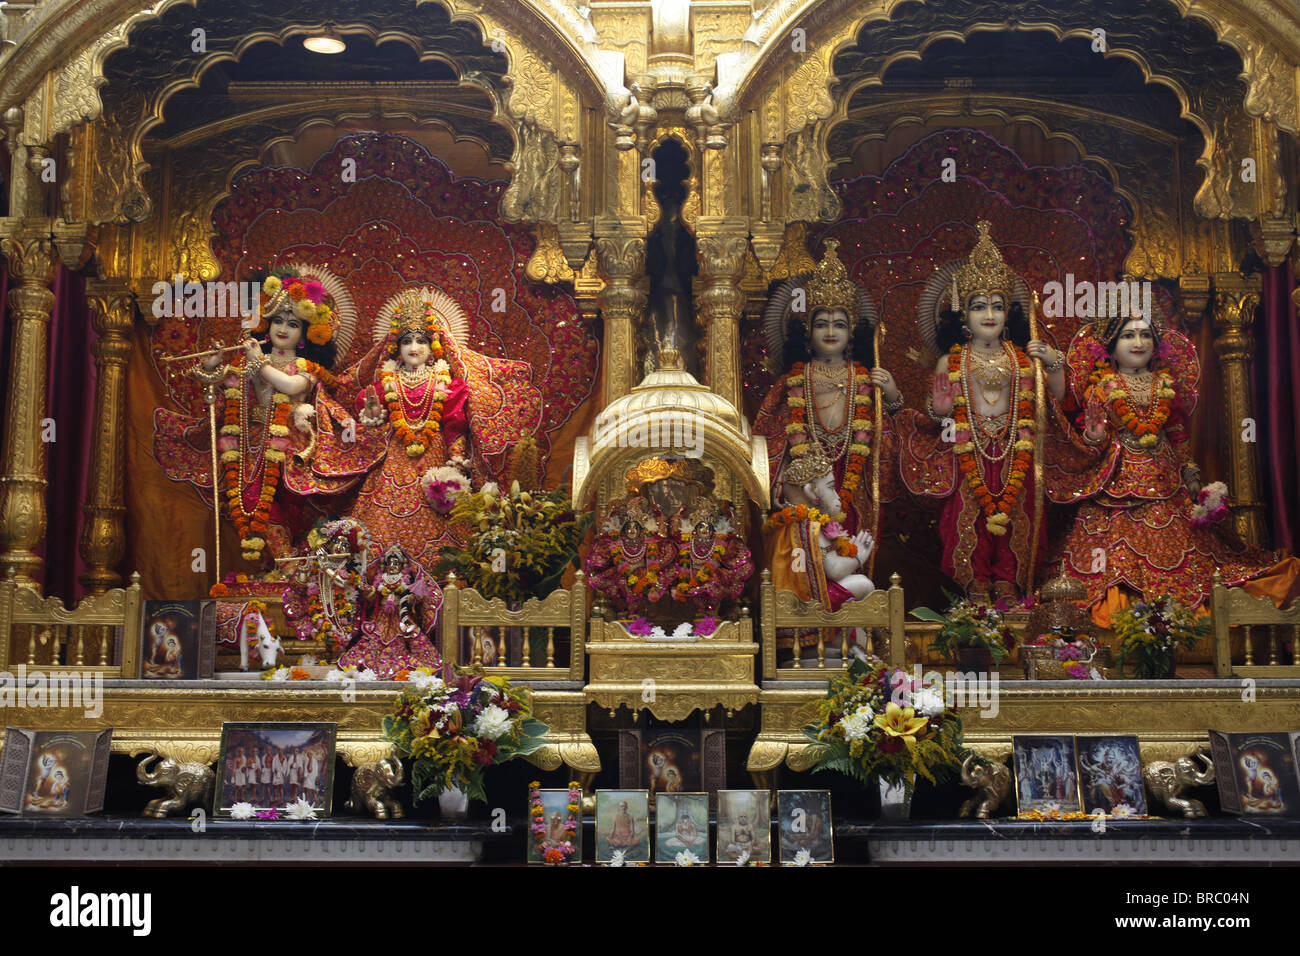 Des statues de Krishna, Rada, Rama, avec Hanuman en face, Sita et Laxmi, Bhaktivedanta Manor temple, Watford, Hertfordshire, Royaume-Uni Banque D'Images